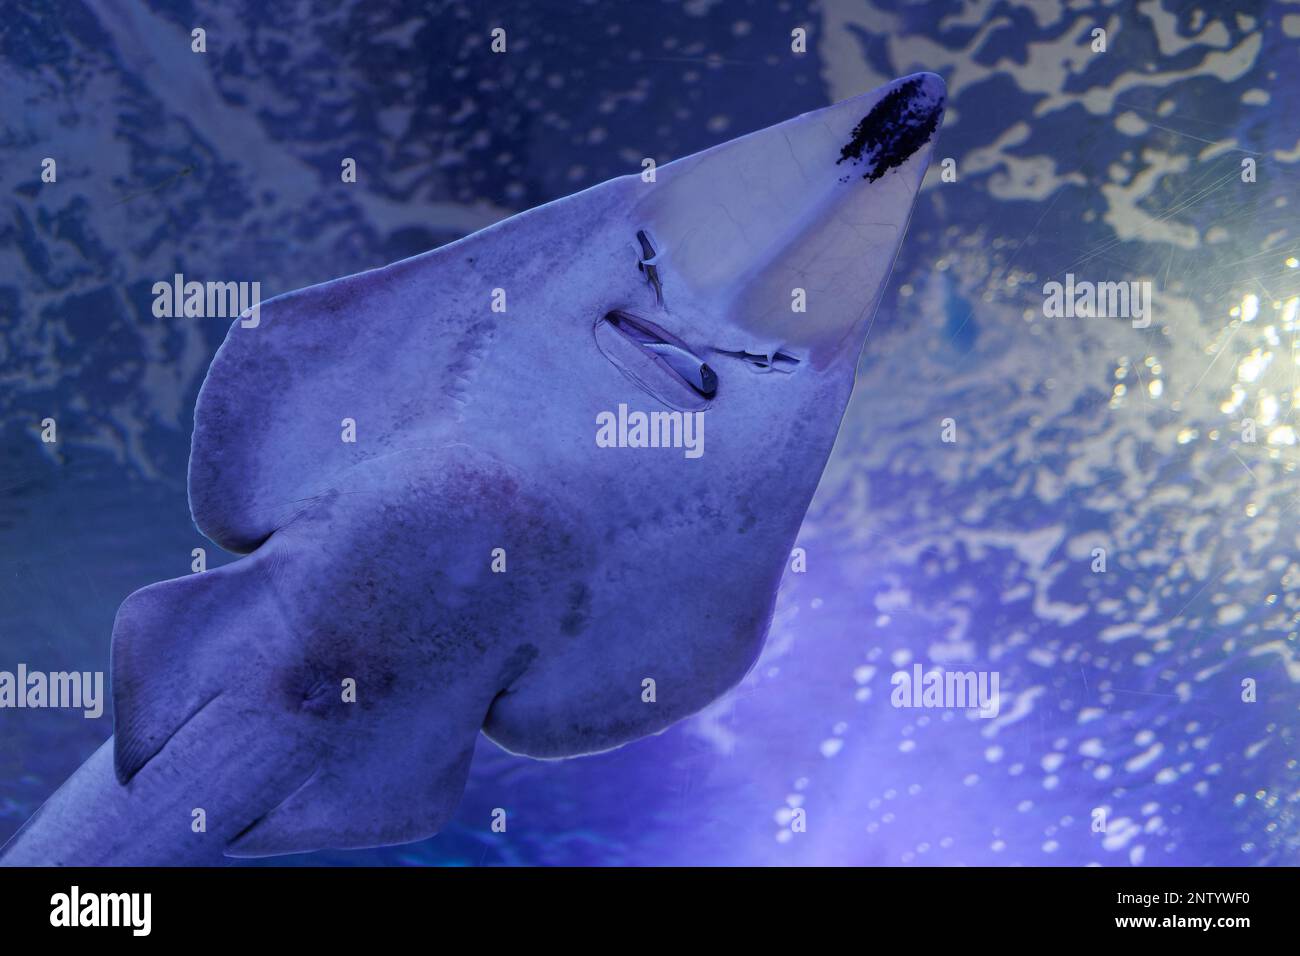 Bottom View of a Stingray Fish inside an Aquarium Stock Photo - Alamy